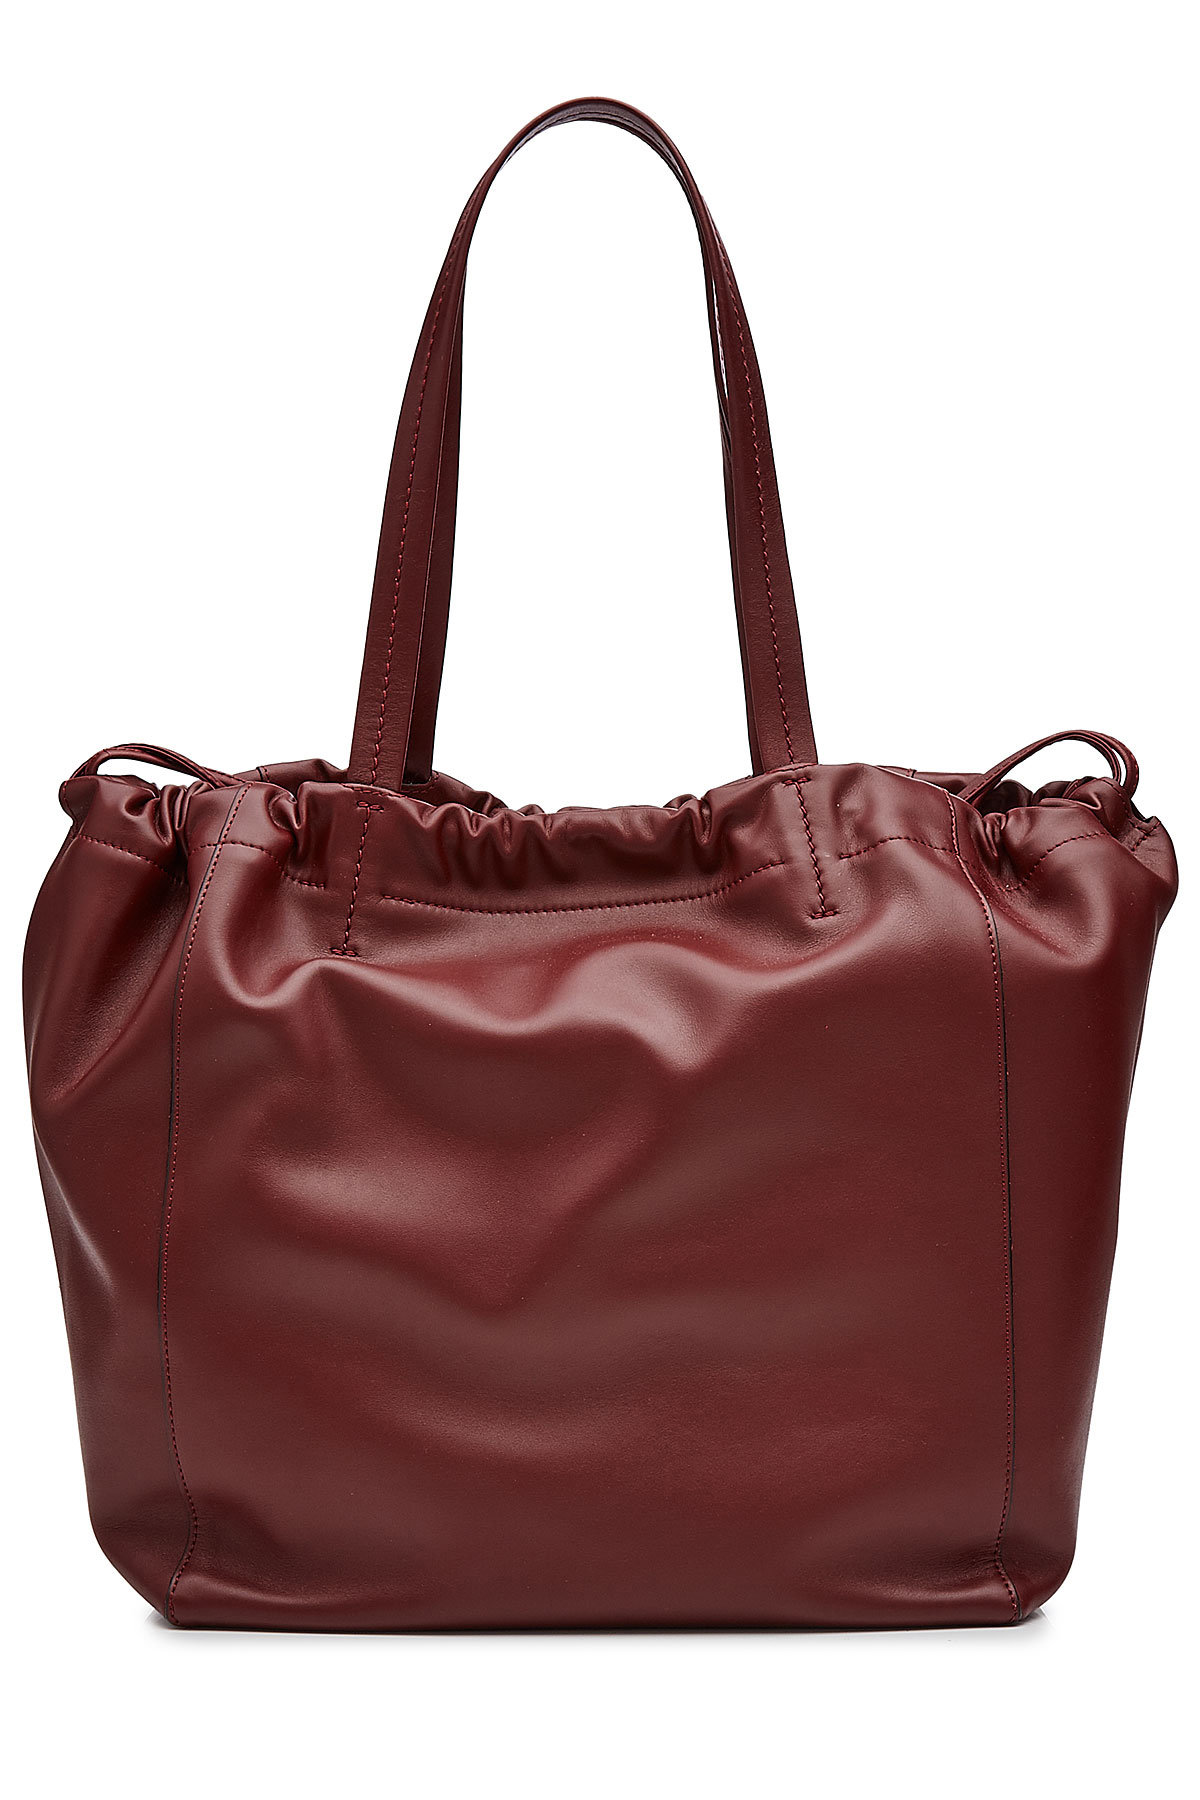 CELINE Handbags New York Sample Sale @ Ruelala - TheStylishCity.com